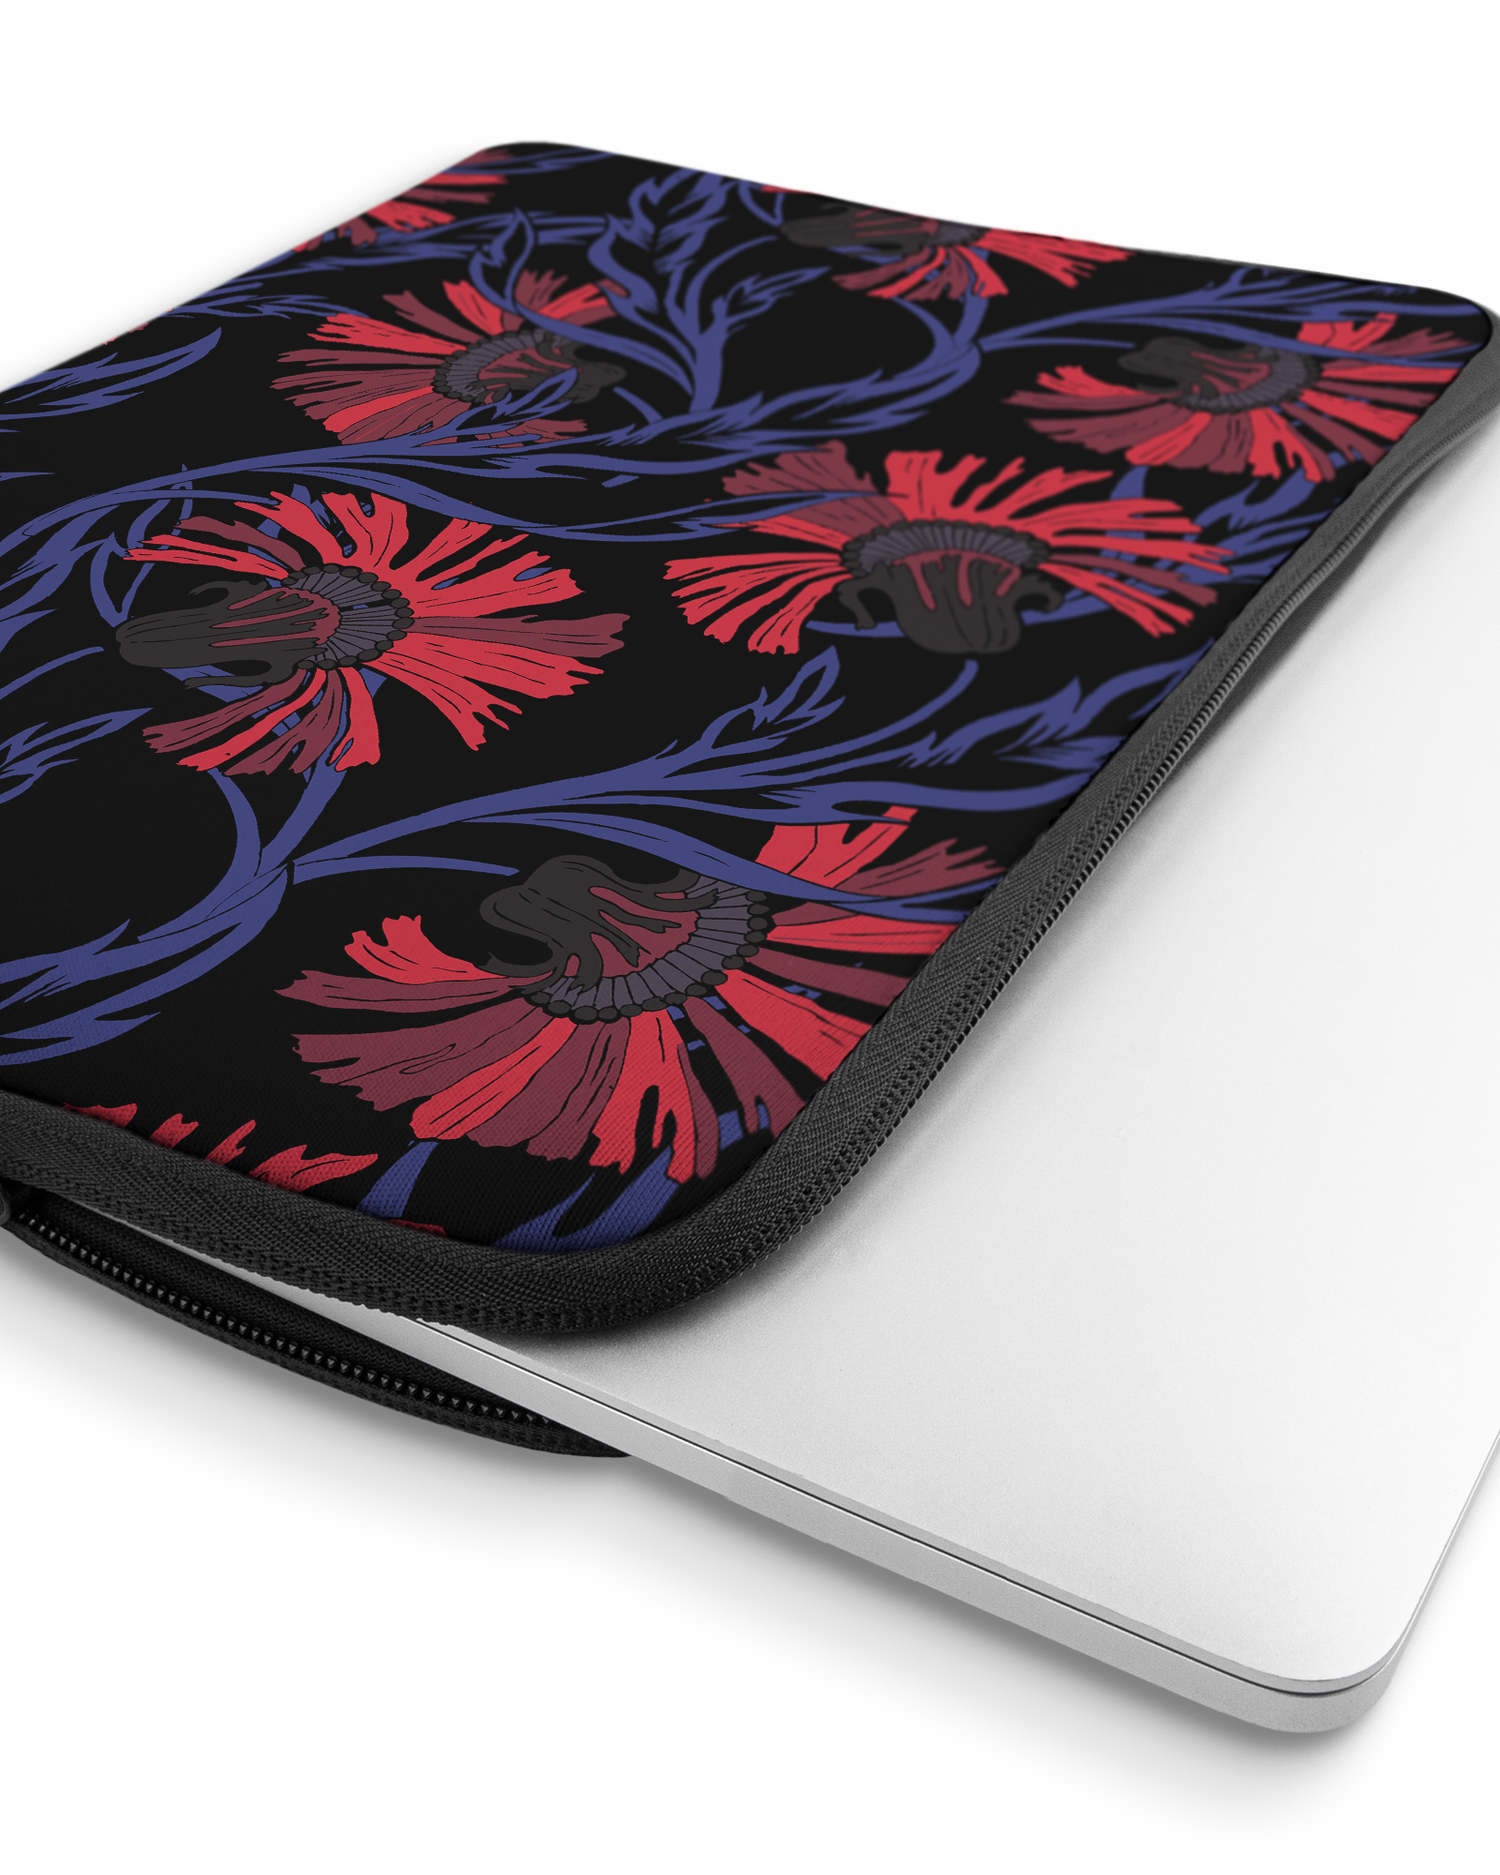 Midnight Floral Laptophülle 16 Zoll mit Gerät im Inneren